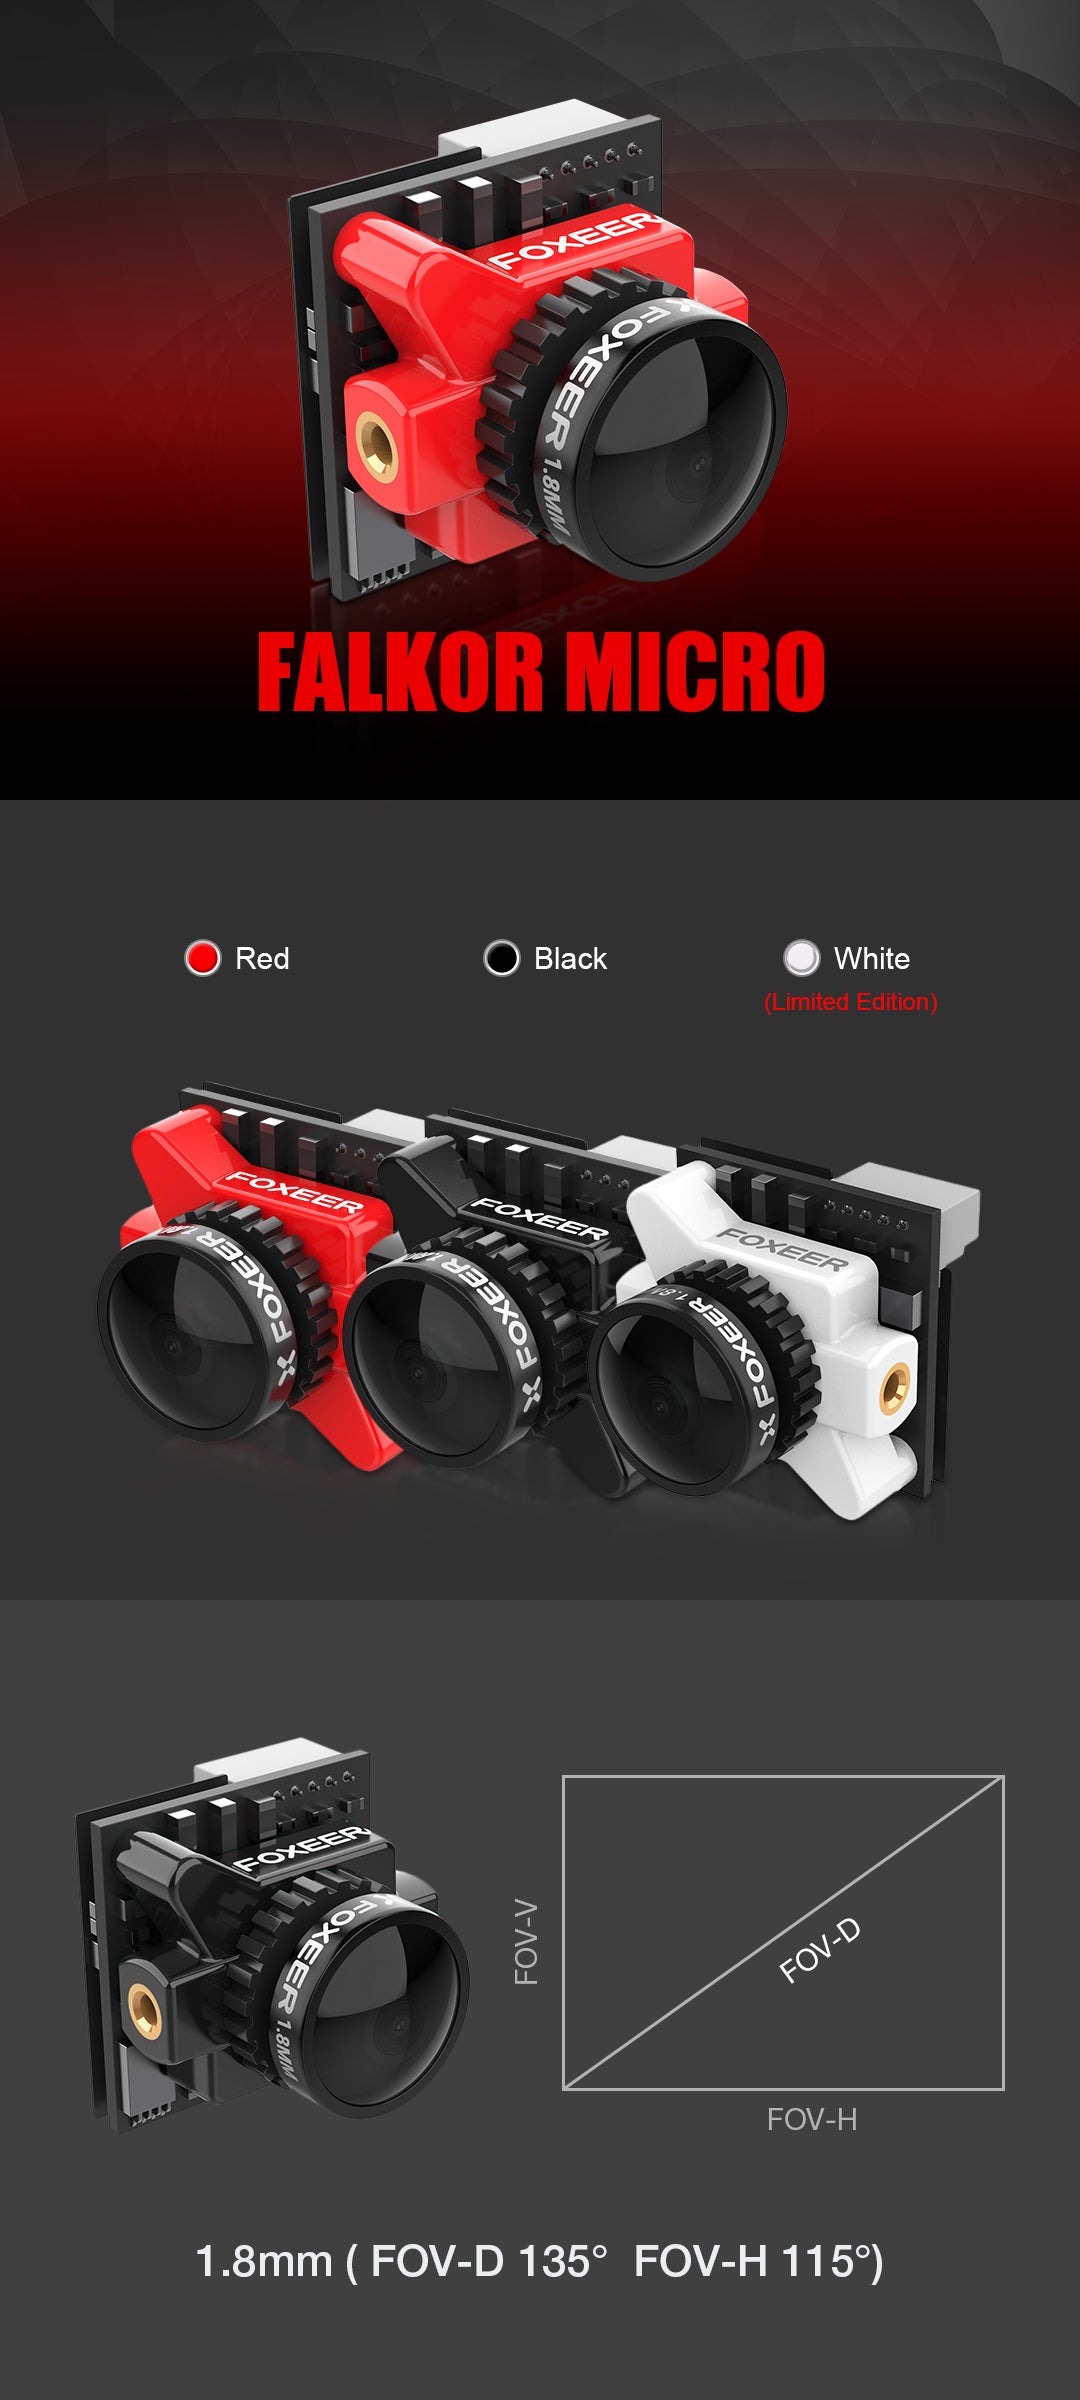 Foxeer Micro Falkor 1200TVL